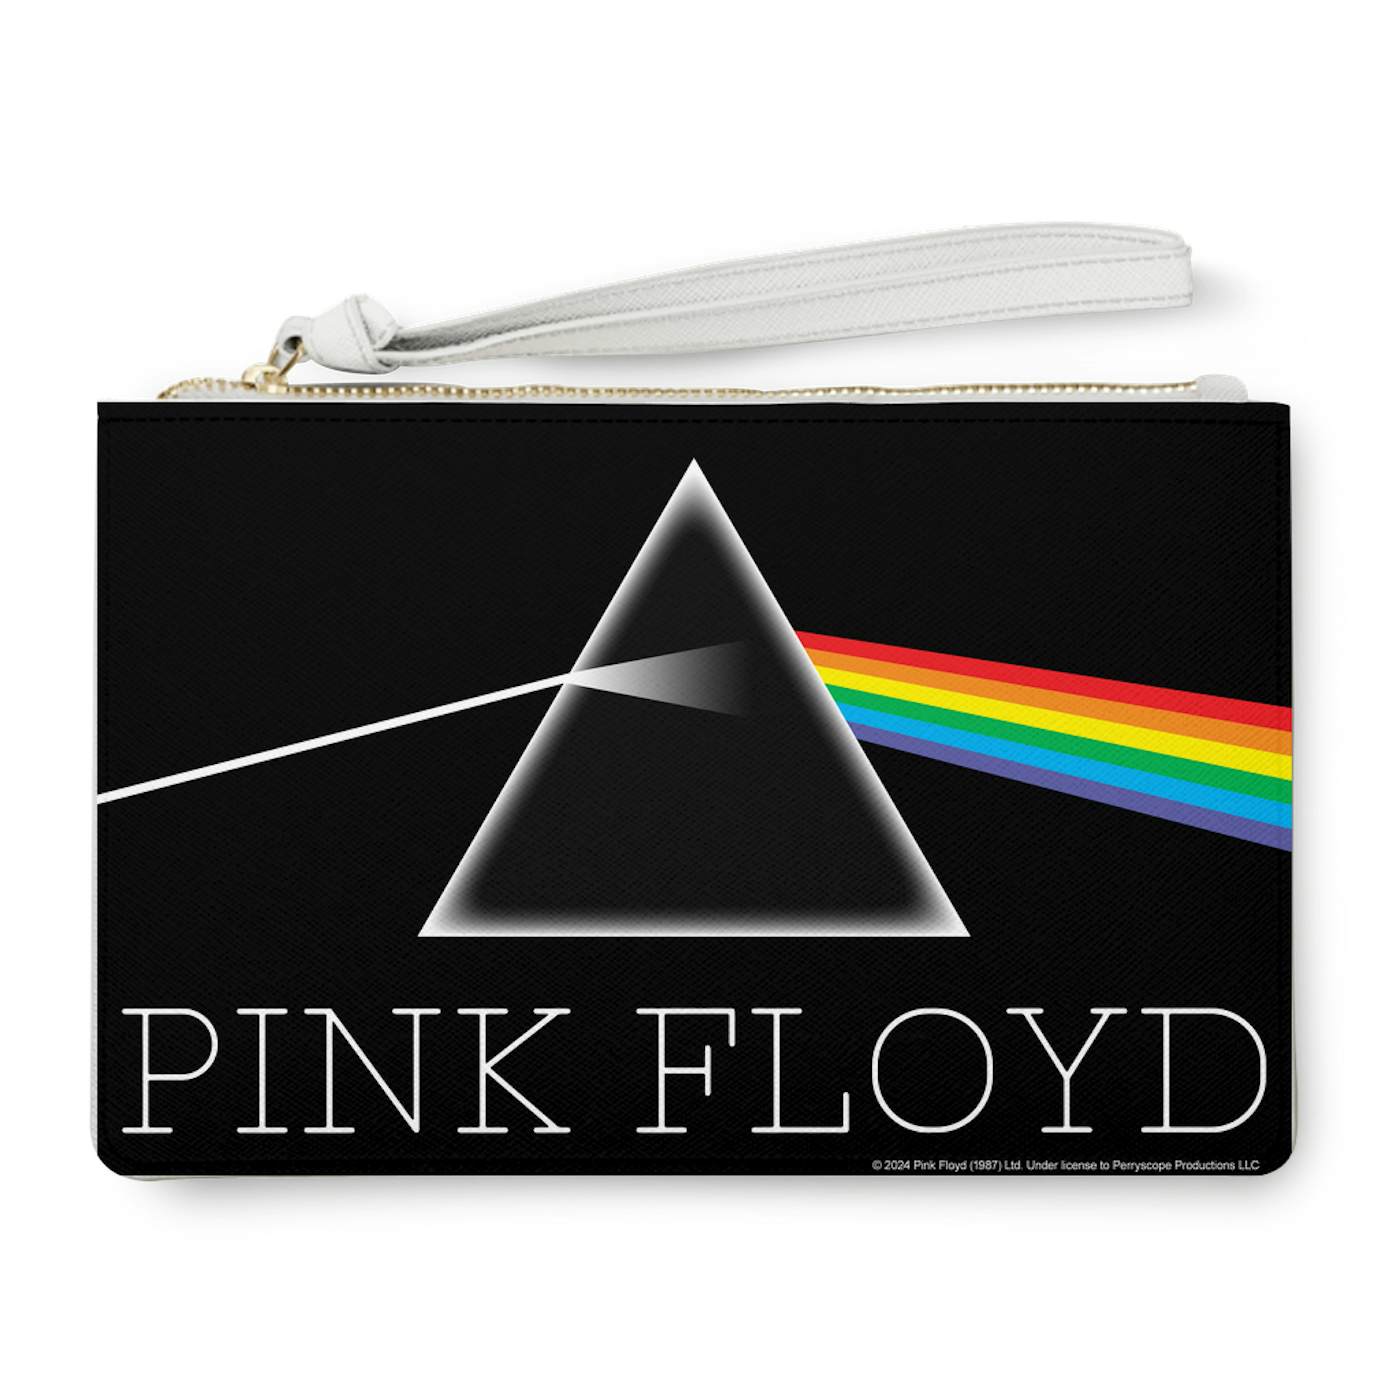 Pink Floyd Clutch  The Dark Side Of The Moon Cassette Tape (Merchbar  Exclusive) Pink Floyd Clutch Bag